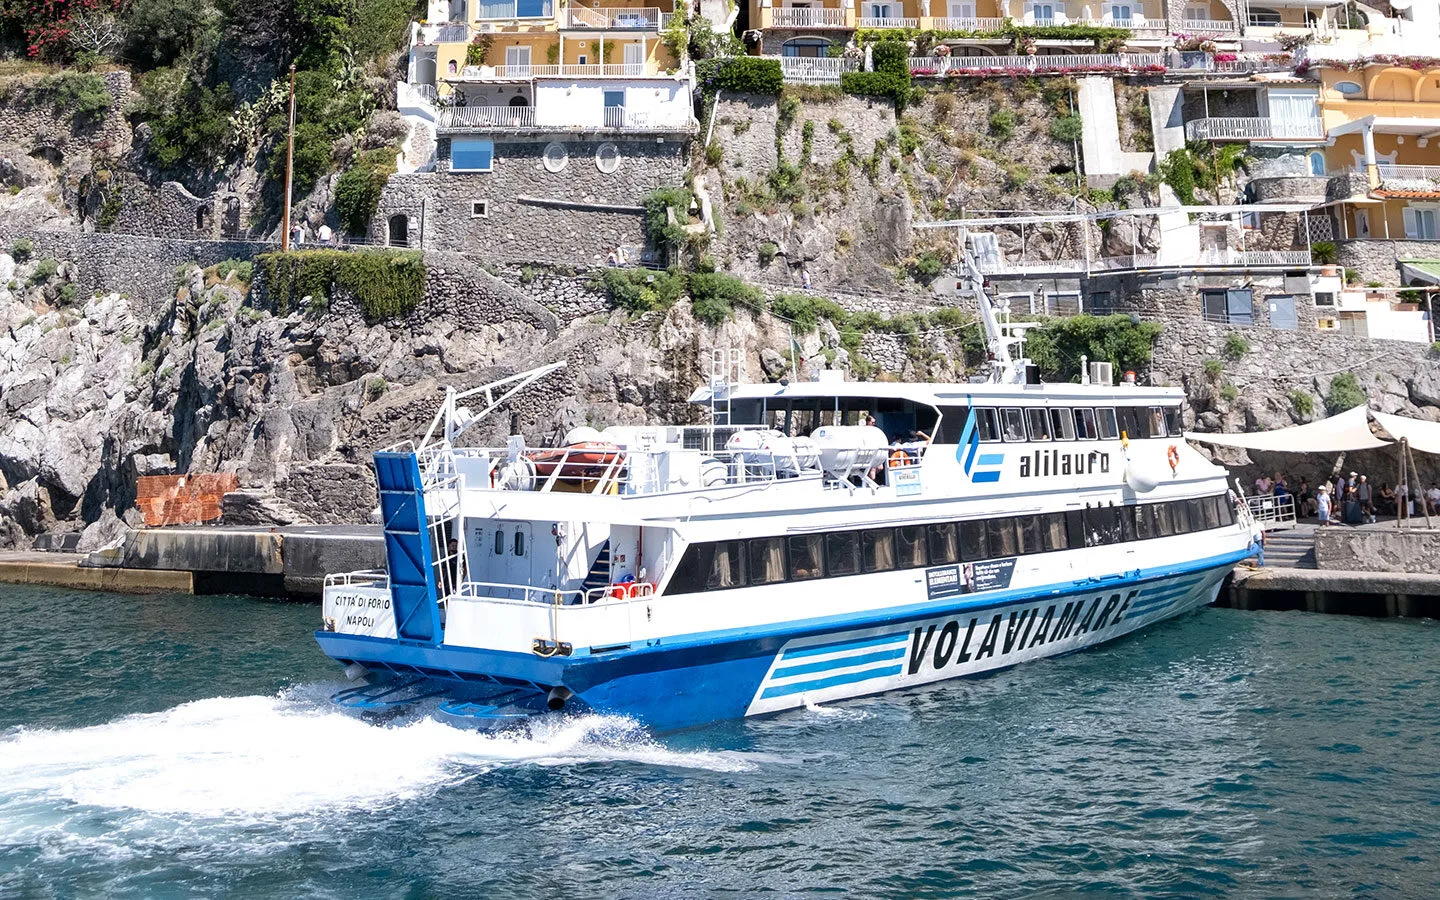 Amalfi Coast ferry docked in Positano